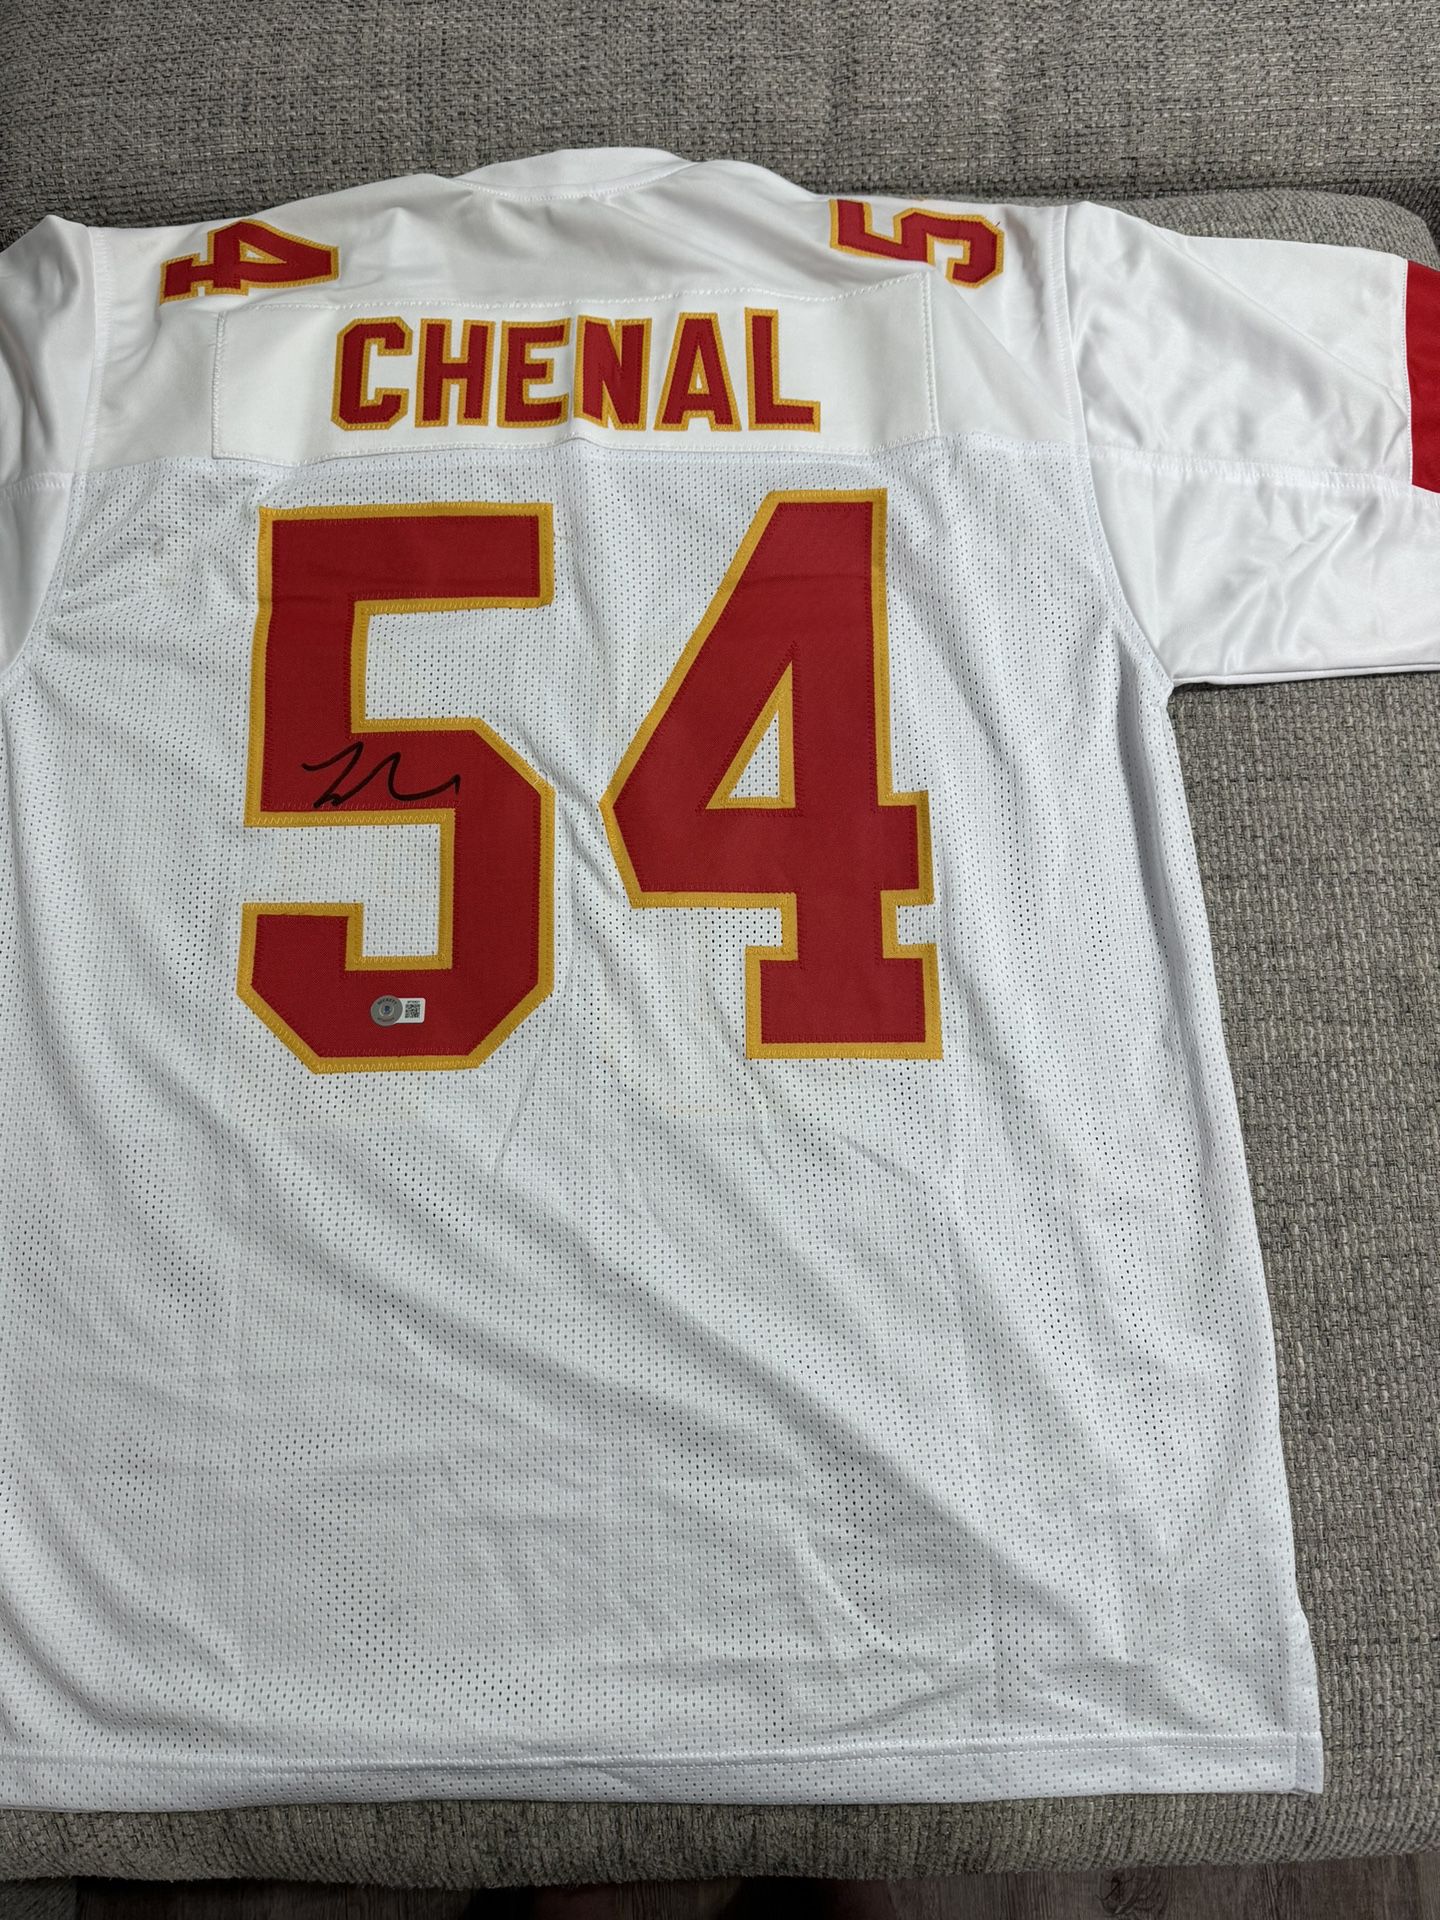 Leo Chenal Signed Autograph Custom Jersey - Beckett Coa - Kansas City Chiefs